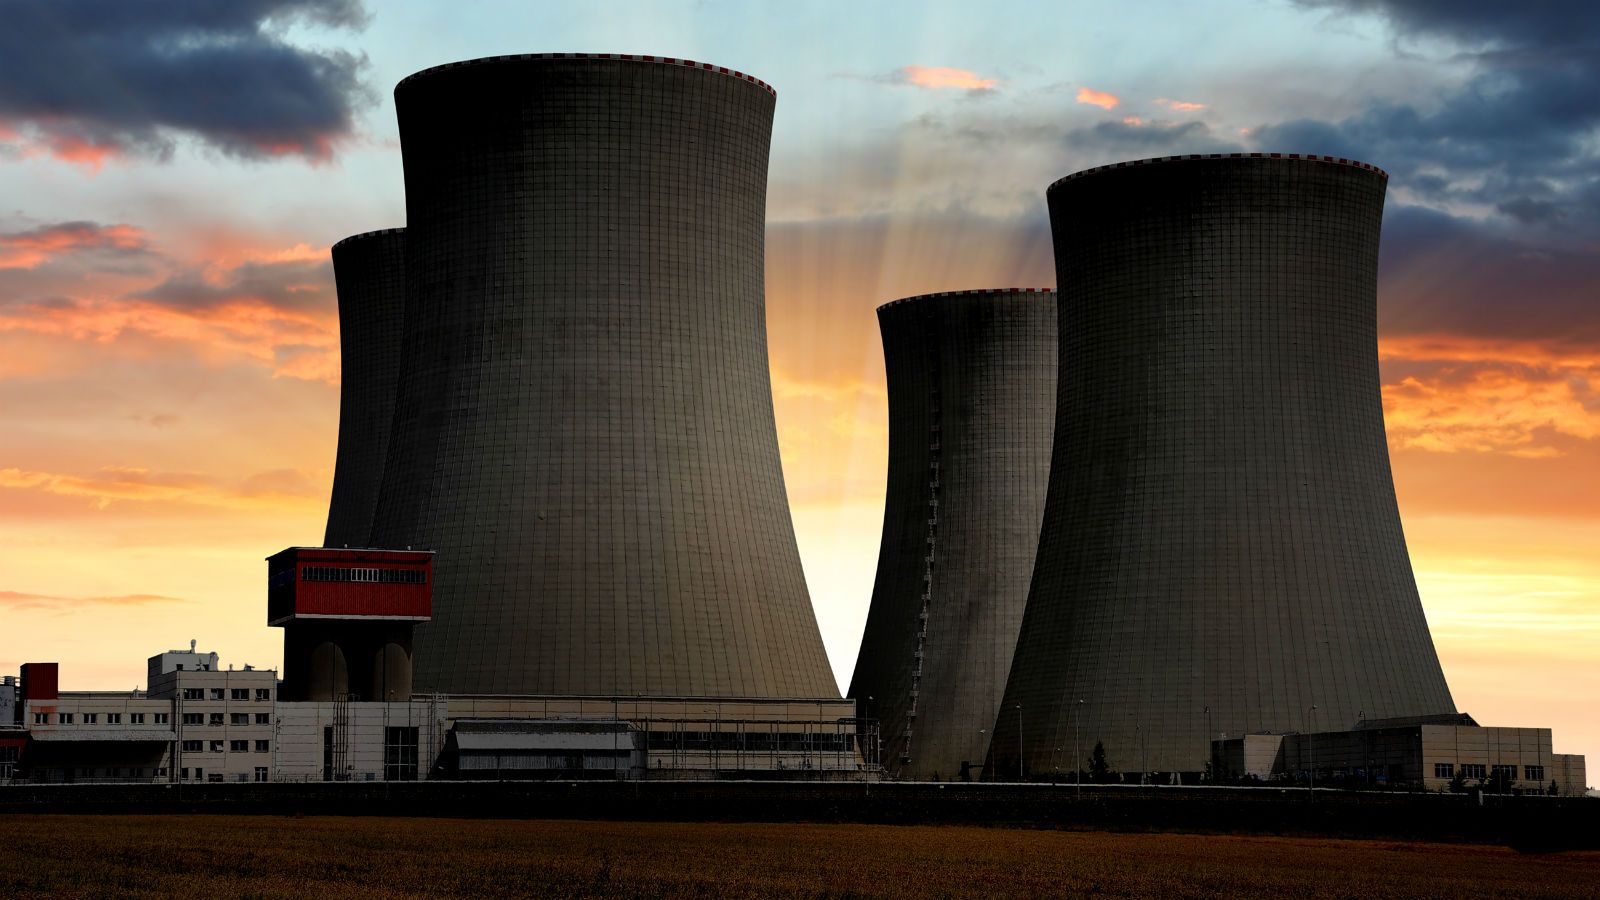 How Long Can Nuclear Reactors Last?